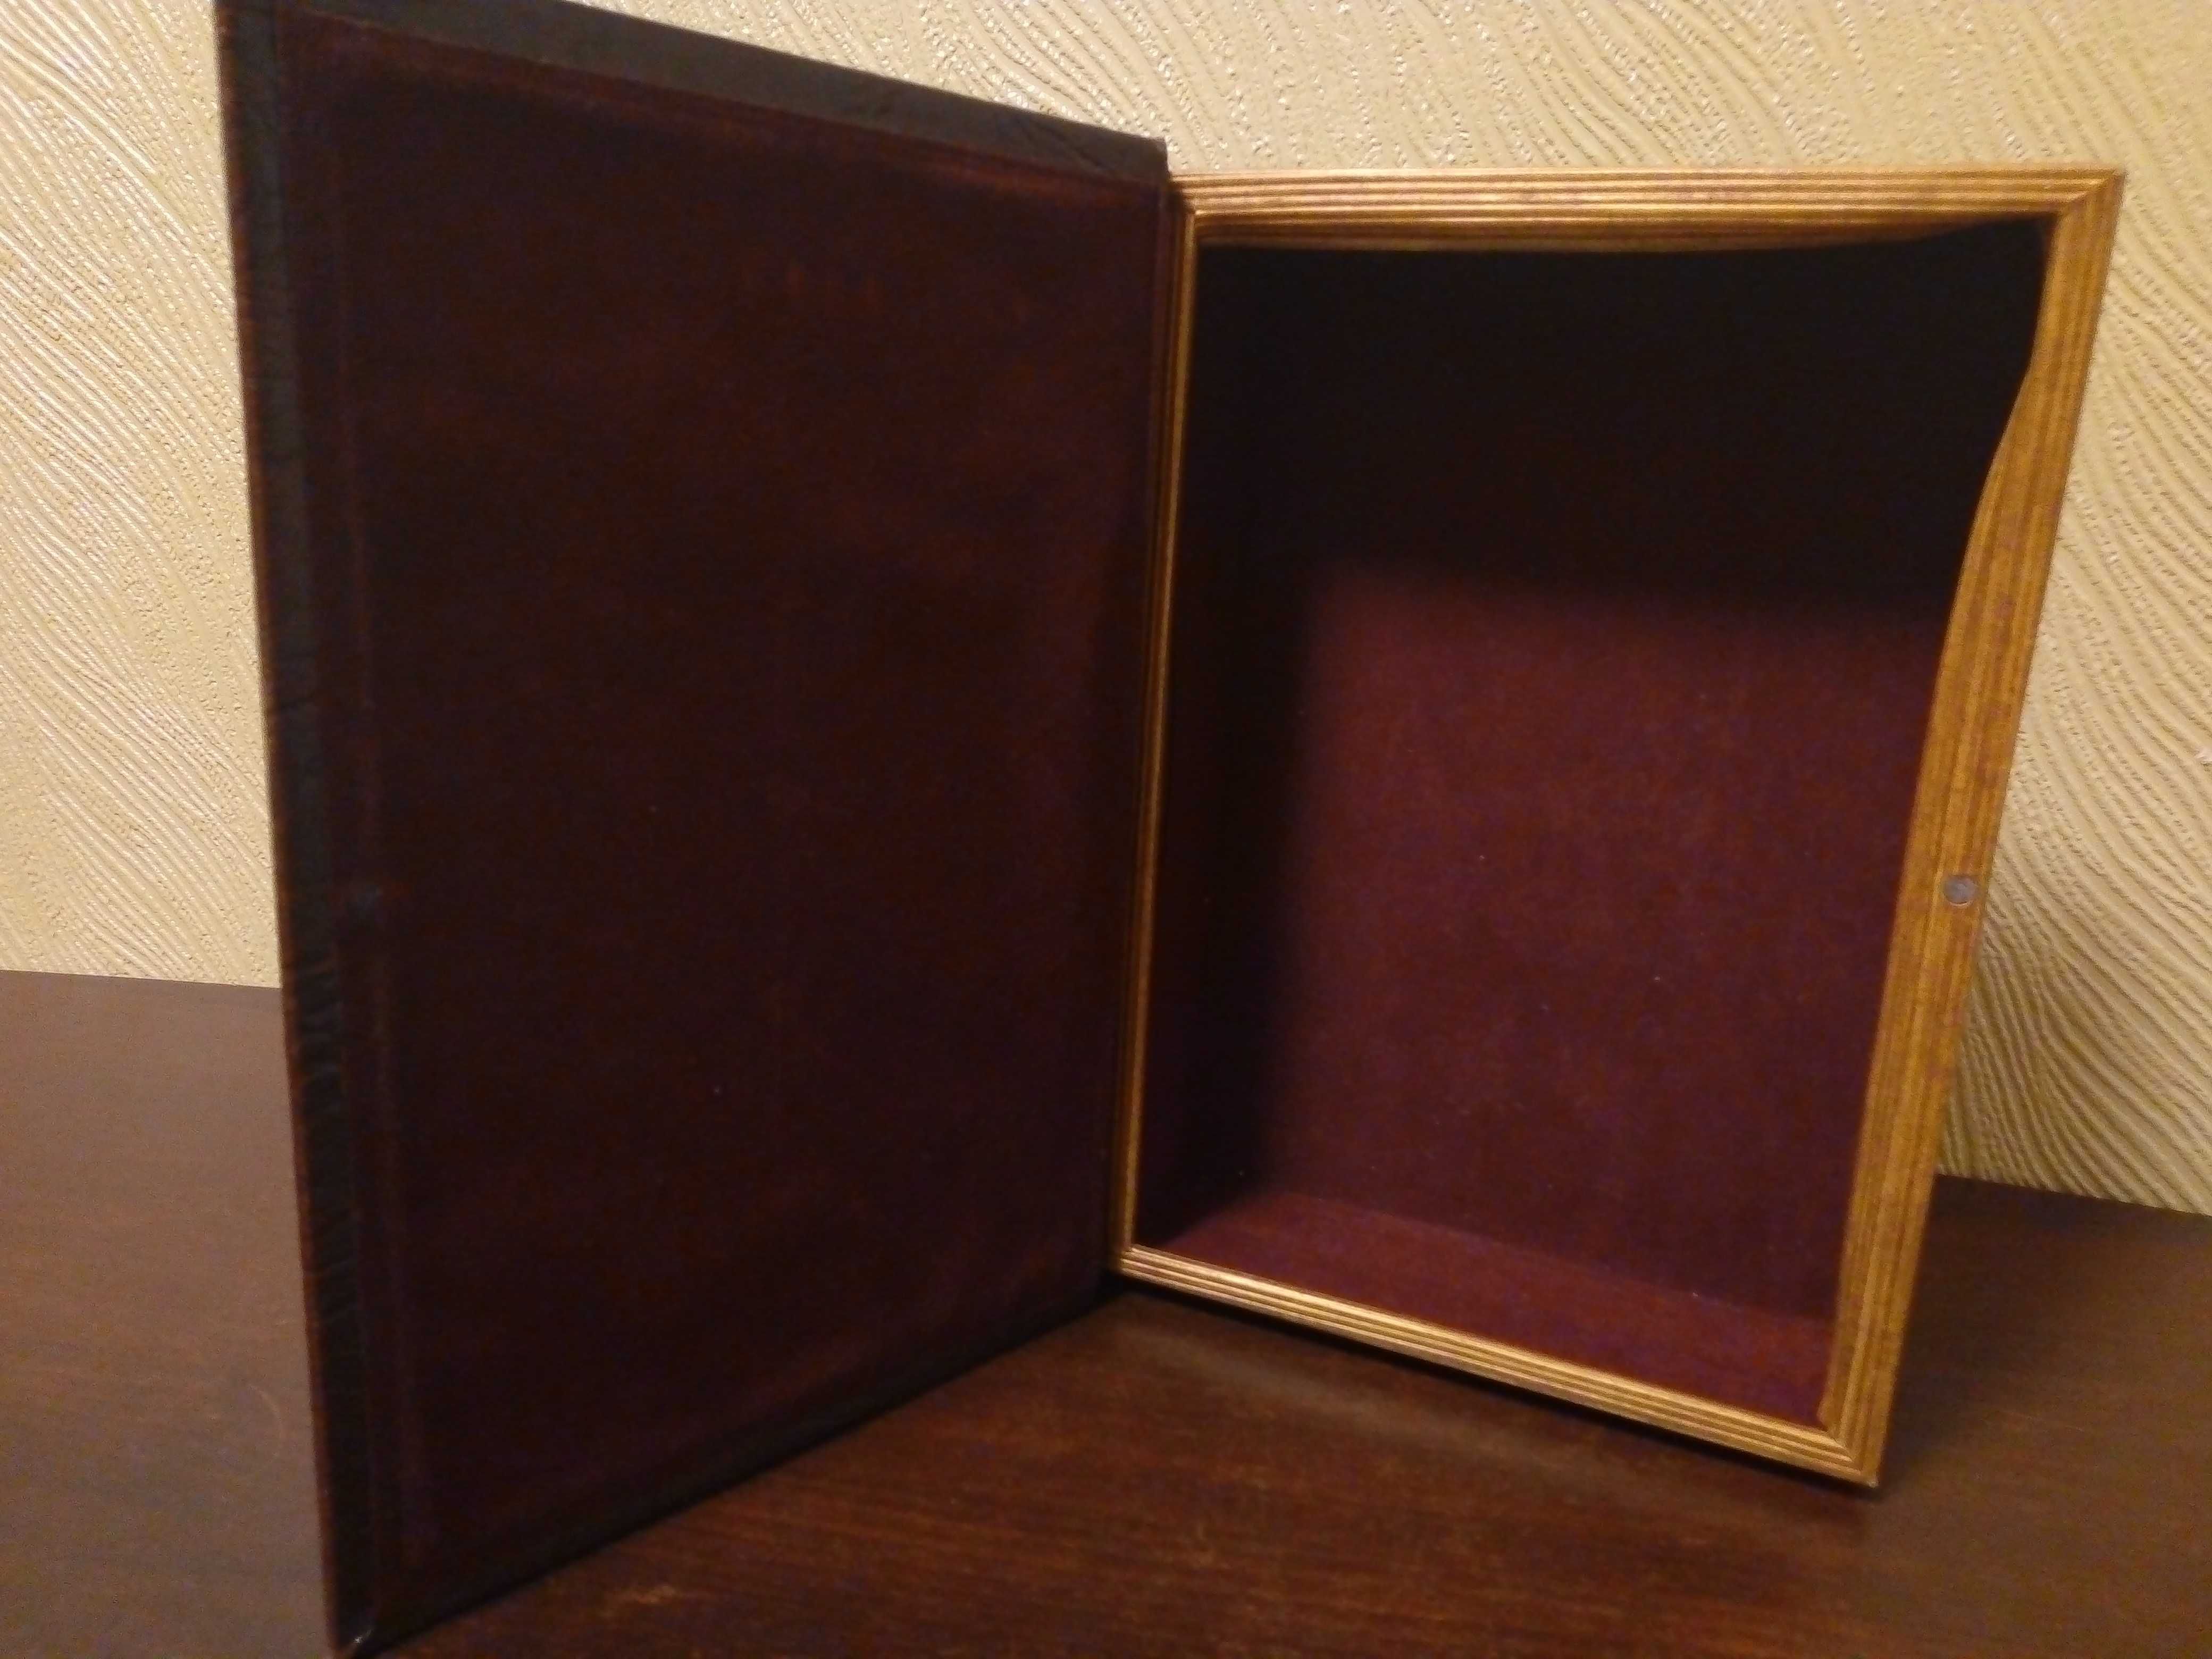 Шкатулка - книга / кейс / коробка для хранения книга обманка